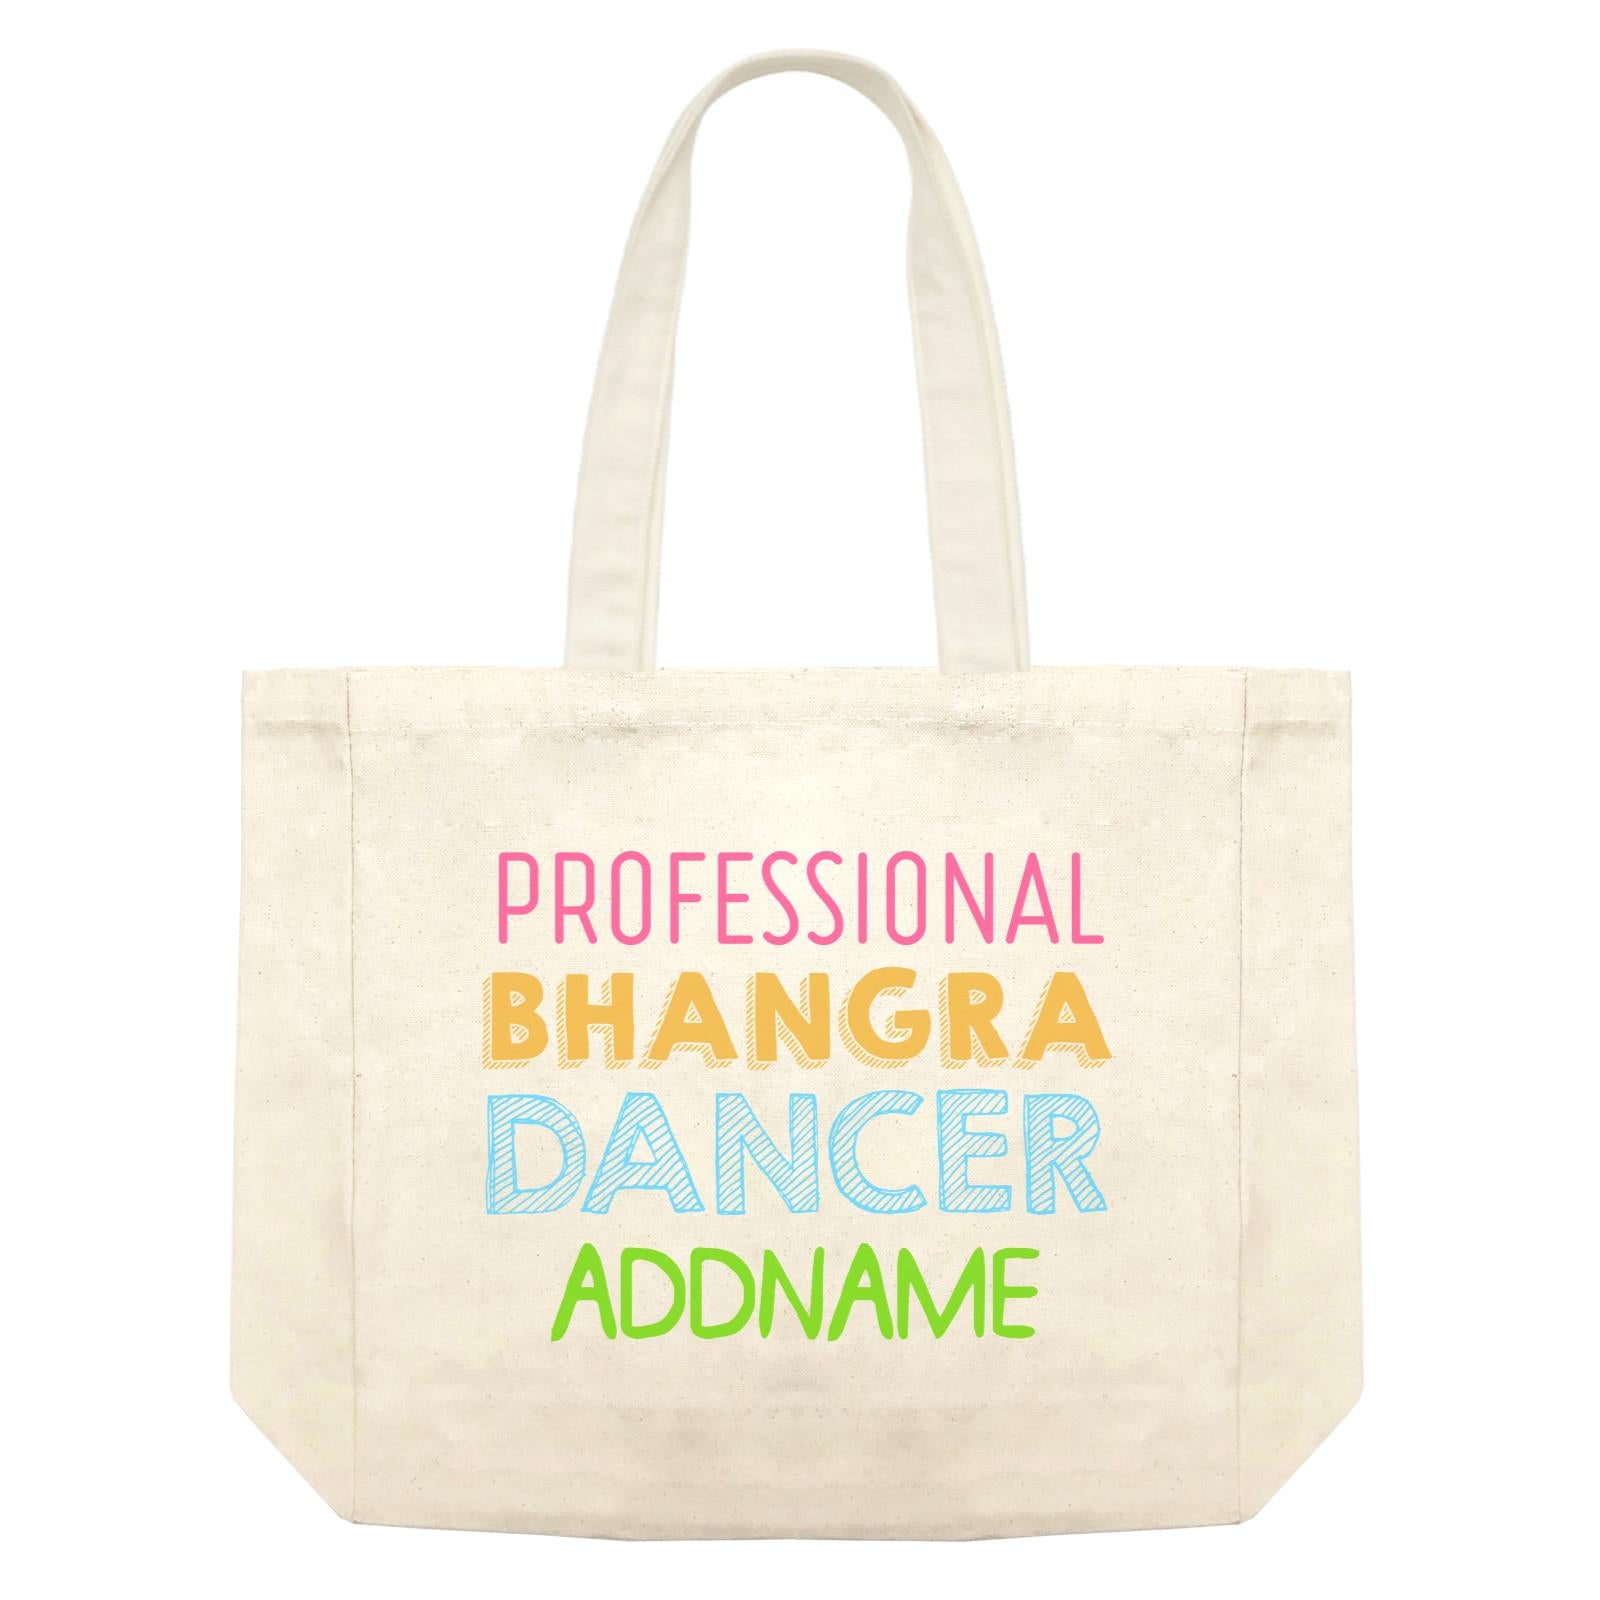 Professional Bhangra Dancer Addname Shopping Bag